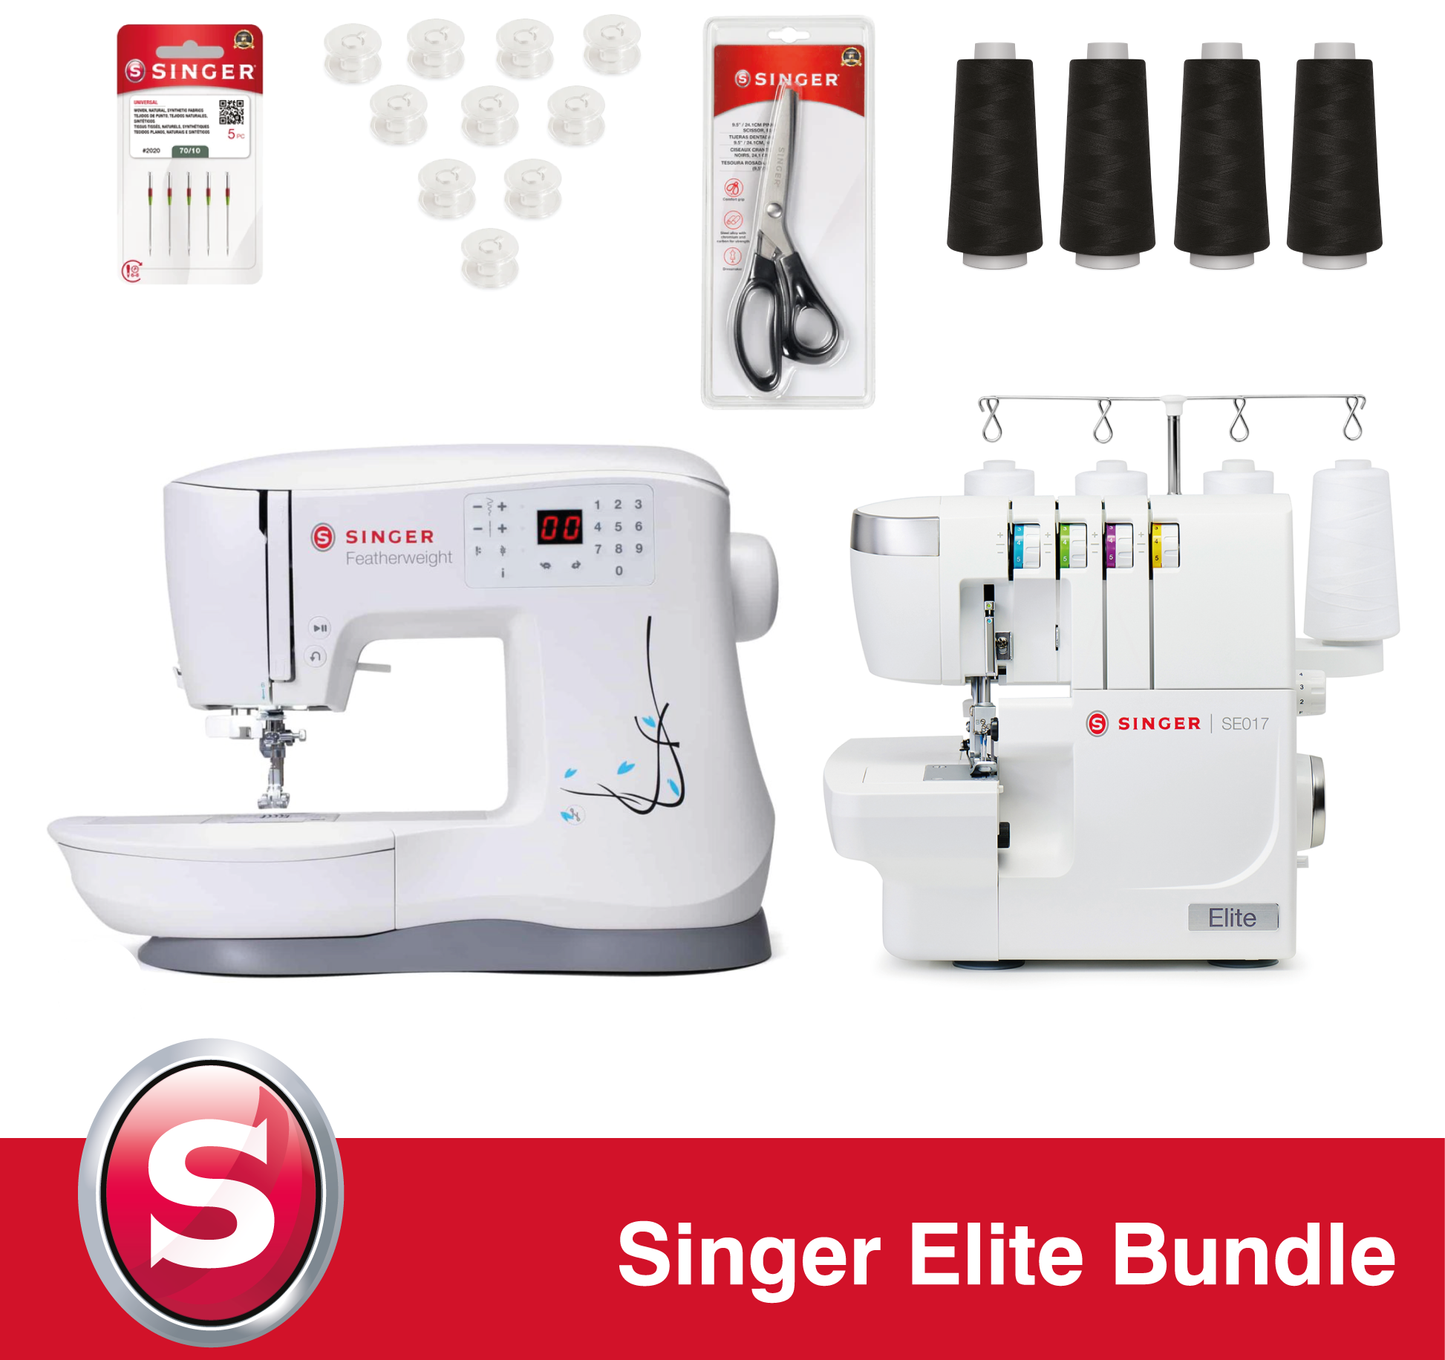 Singer Elite Bundle - Singer C240 Dual Feed Sewing Machine + Singer SE017 Elite Overlocker + Accessory Set